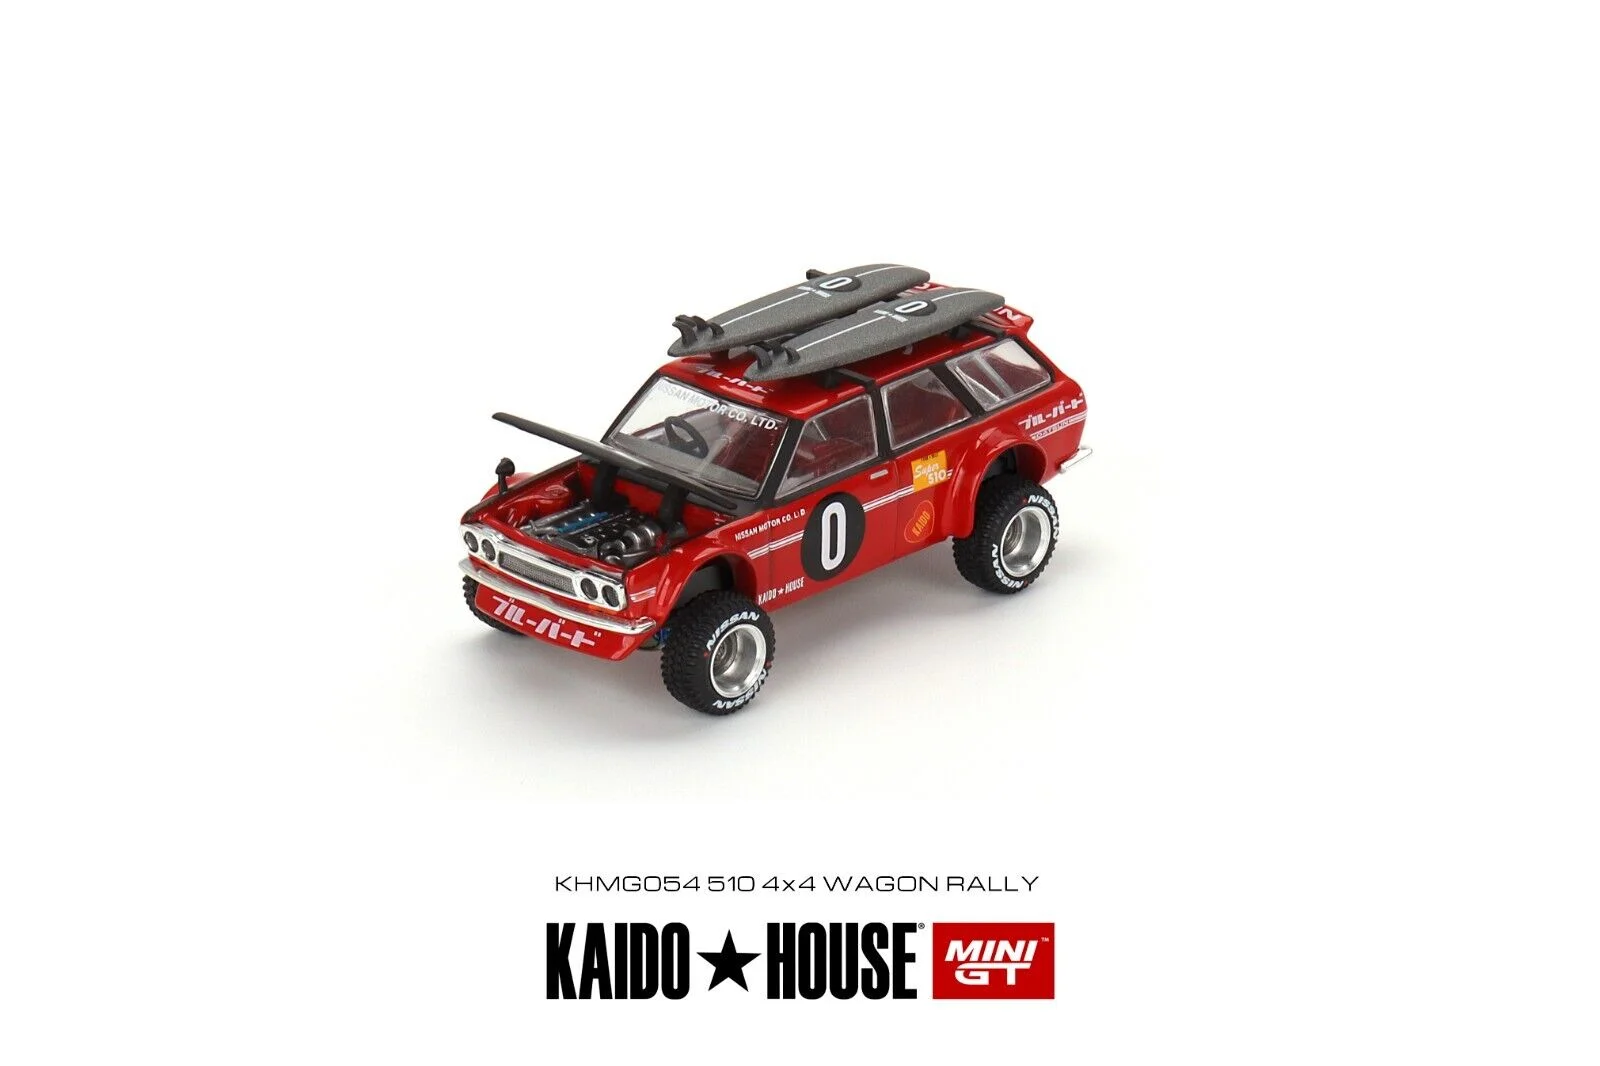 

Mini GT x Kaido 1:64 Datsun KAIDO 510 Wagon GT Surf Safari RS V2 #54 Diecast Model Car Collection Limited Edition Hobby Toys